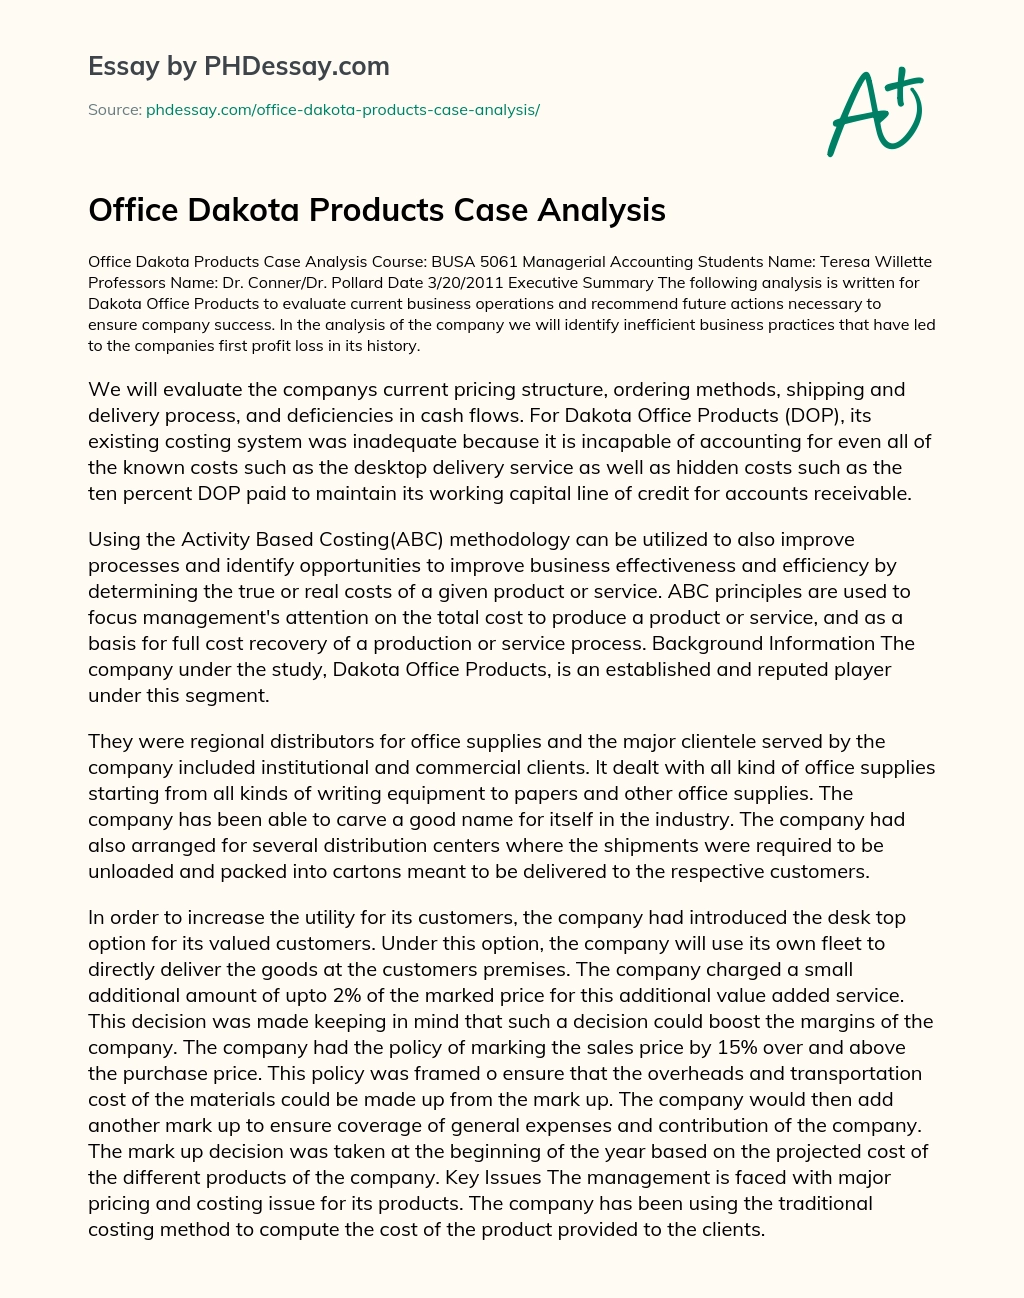 Office Dakota Products Case Analysis essay